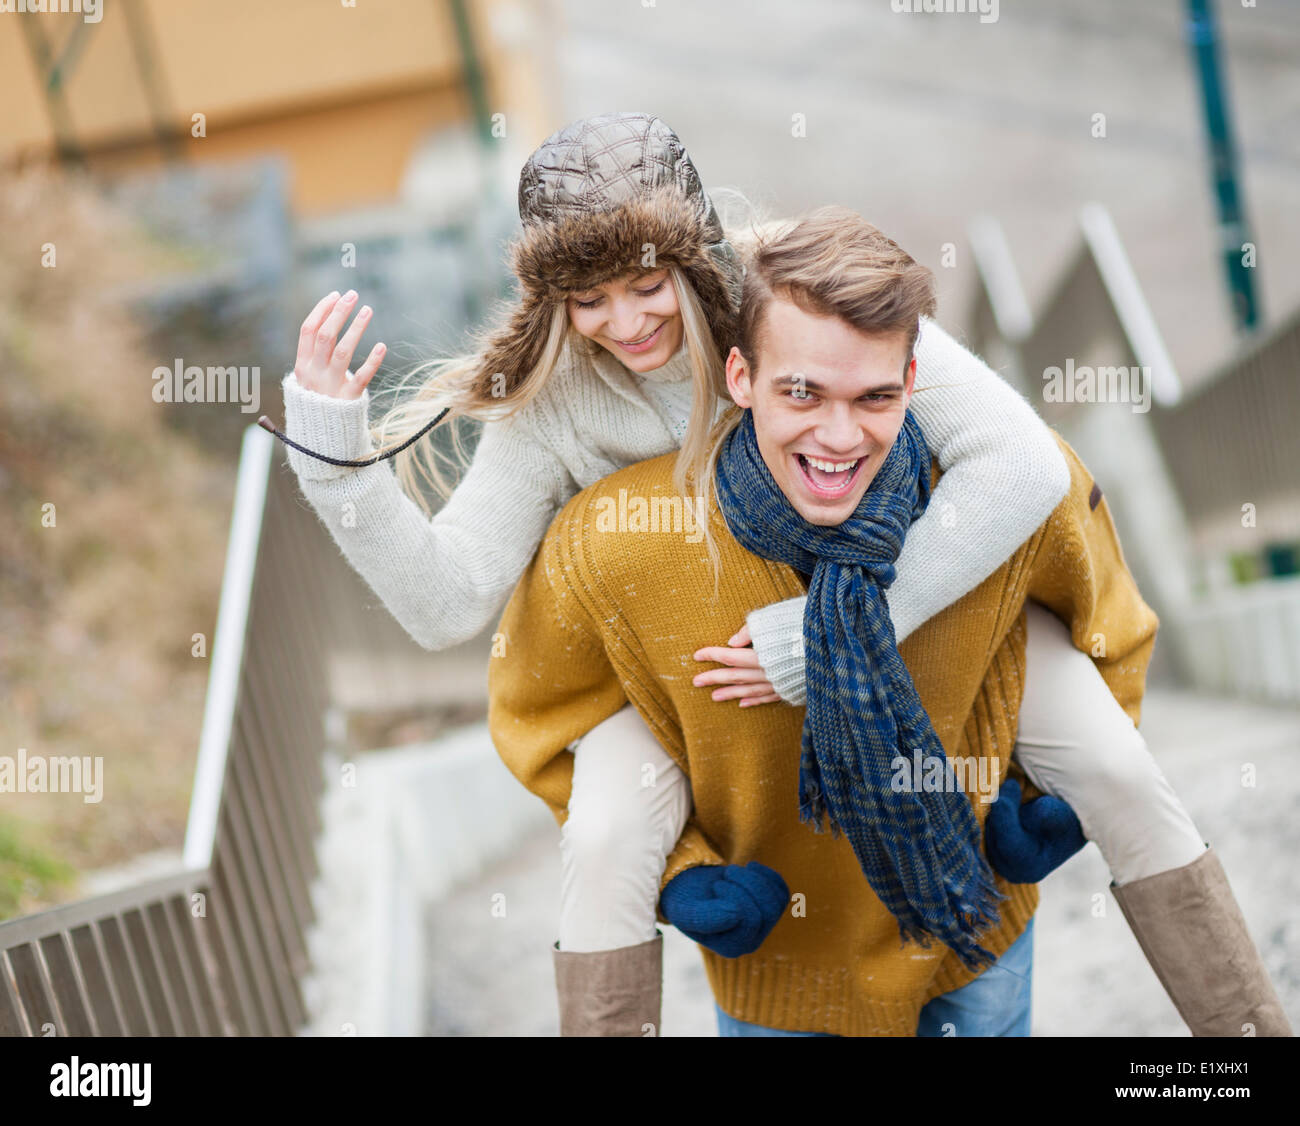 Portrait of cheerful man piggybacking woman on stairway Stock Photo